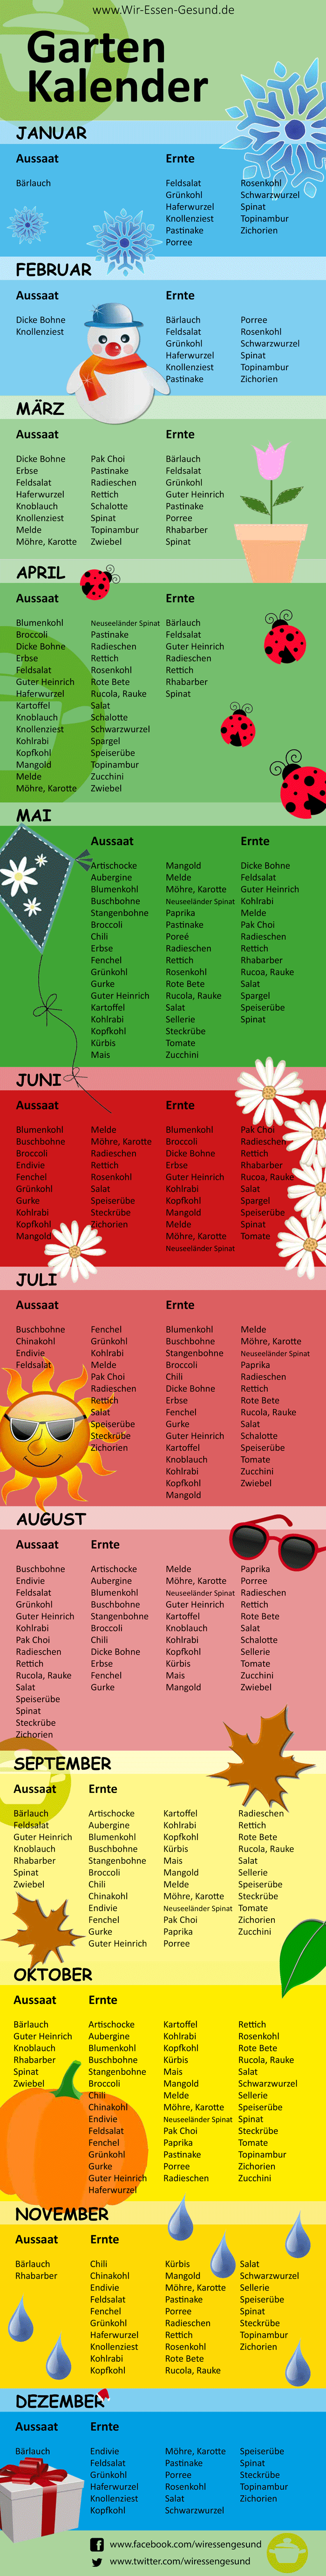 Gartenkalender 2015